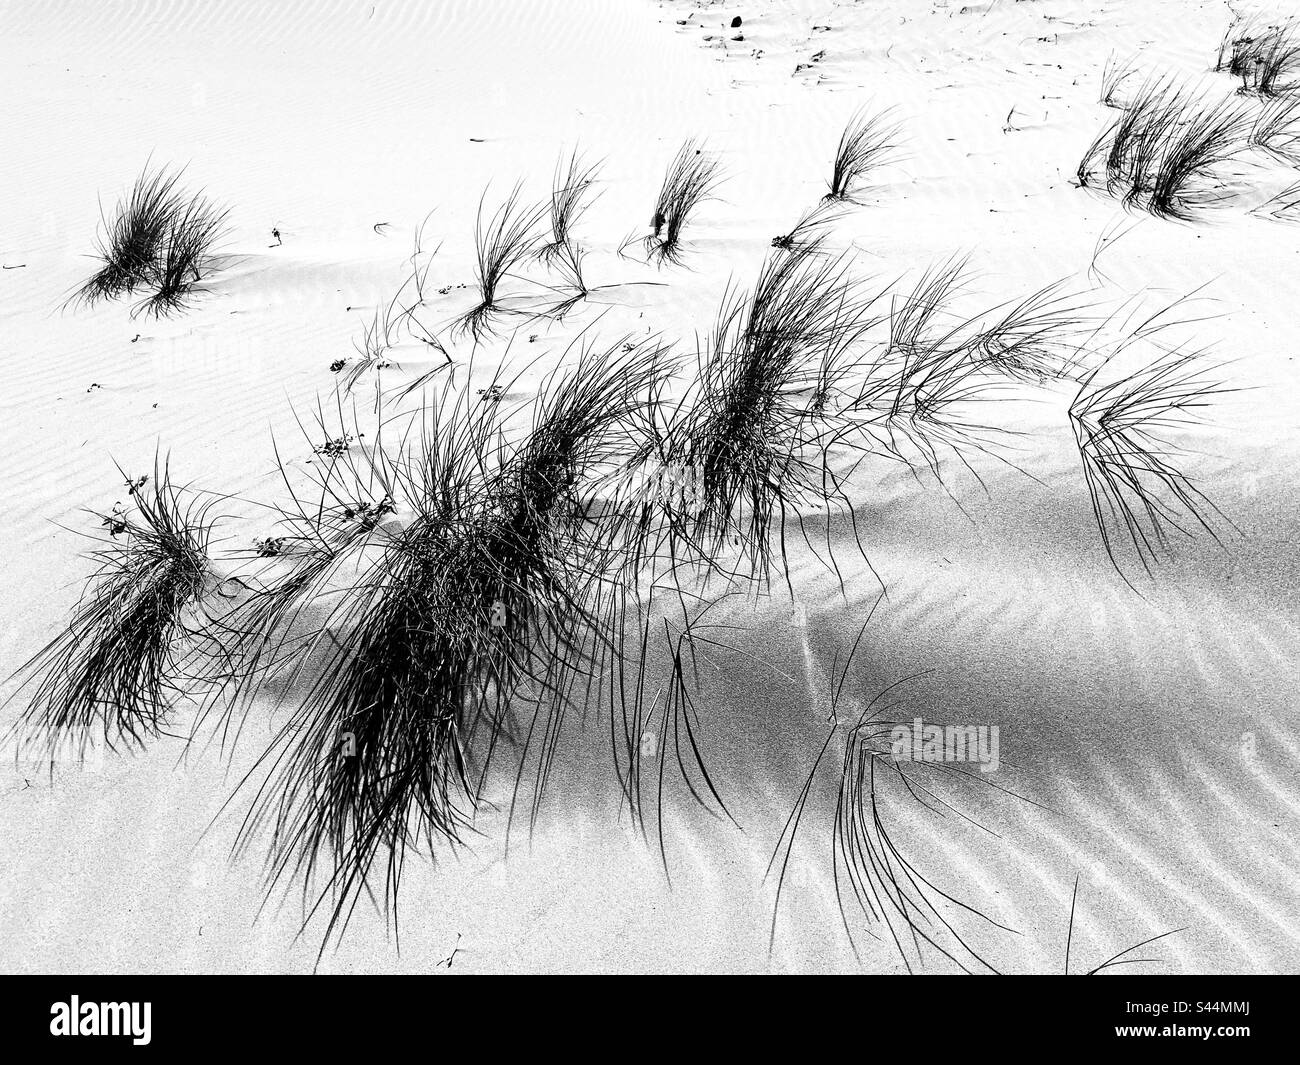 Marram grass growing amongst sand dunes Stock Photo - Alamy